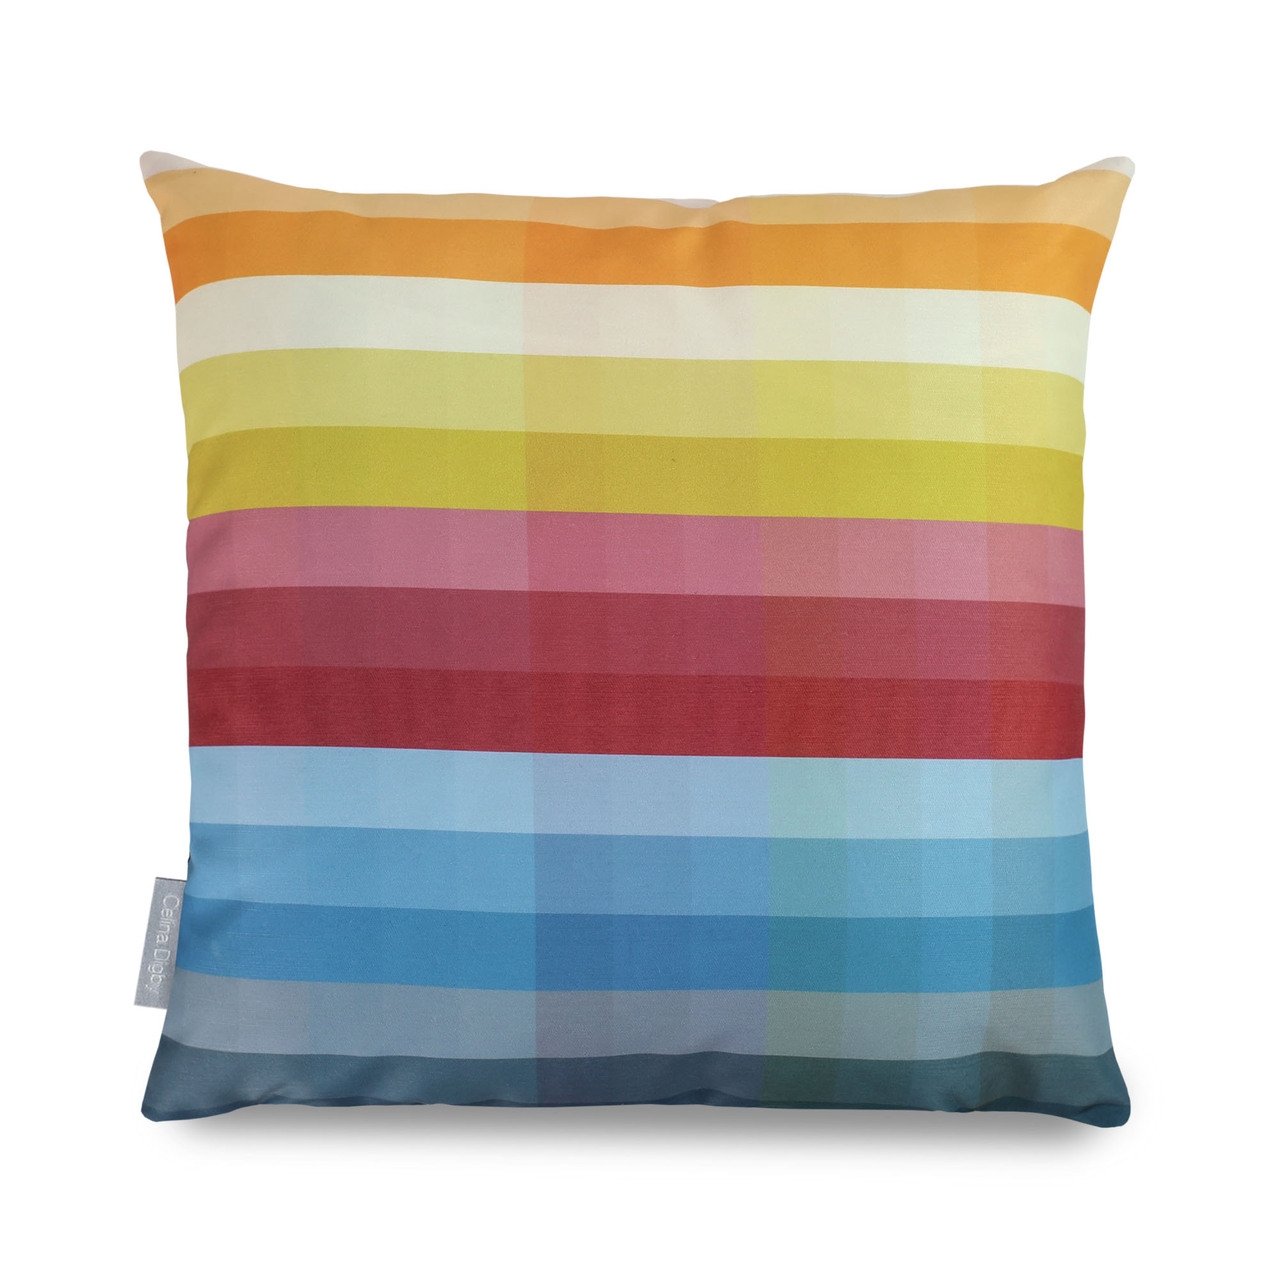 Celina Digby Luxury Water Resistant Garden Cushion – Pixel Stripes 55cm x